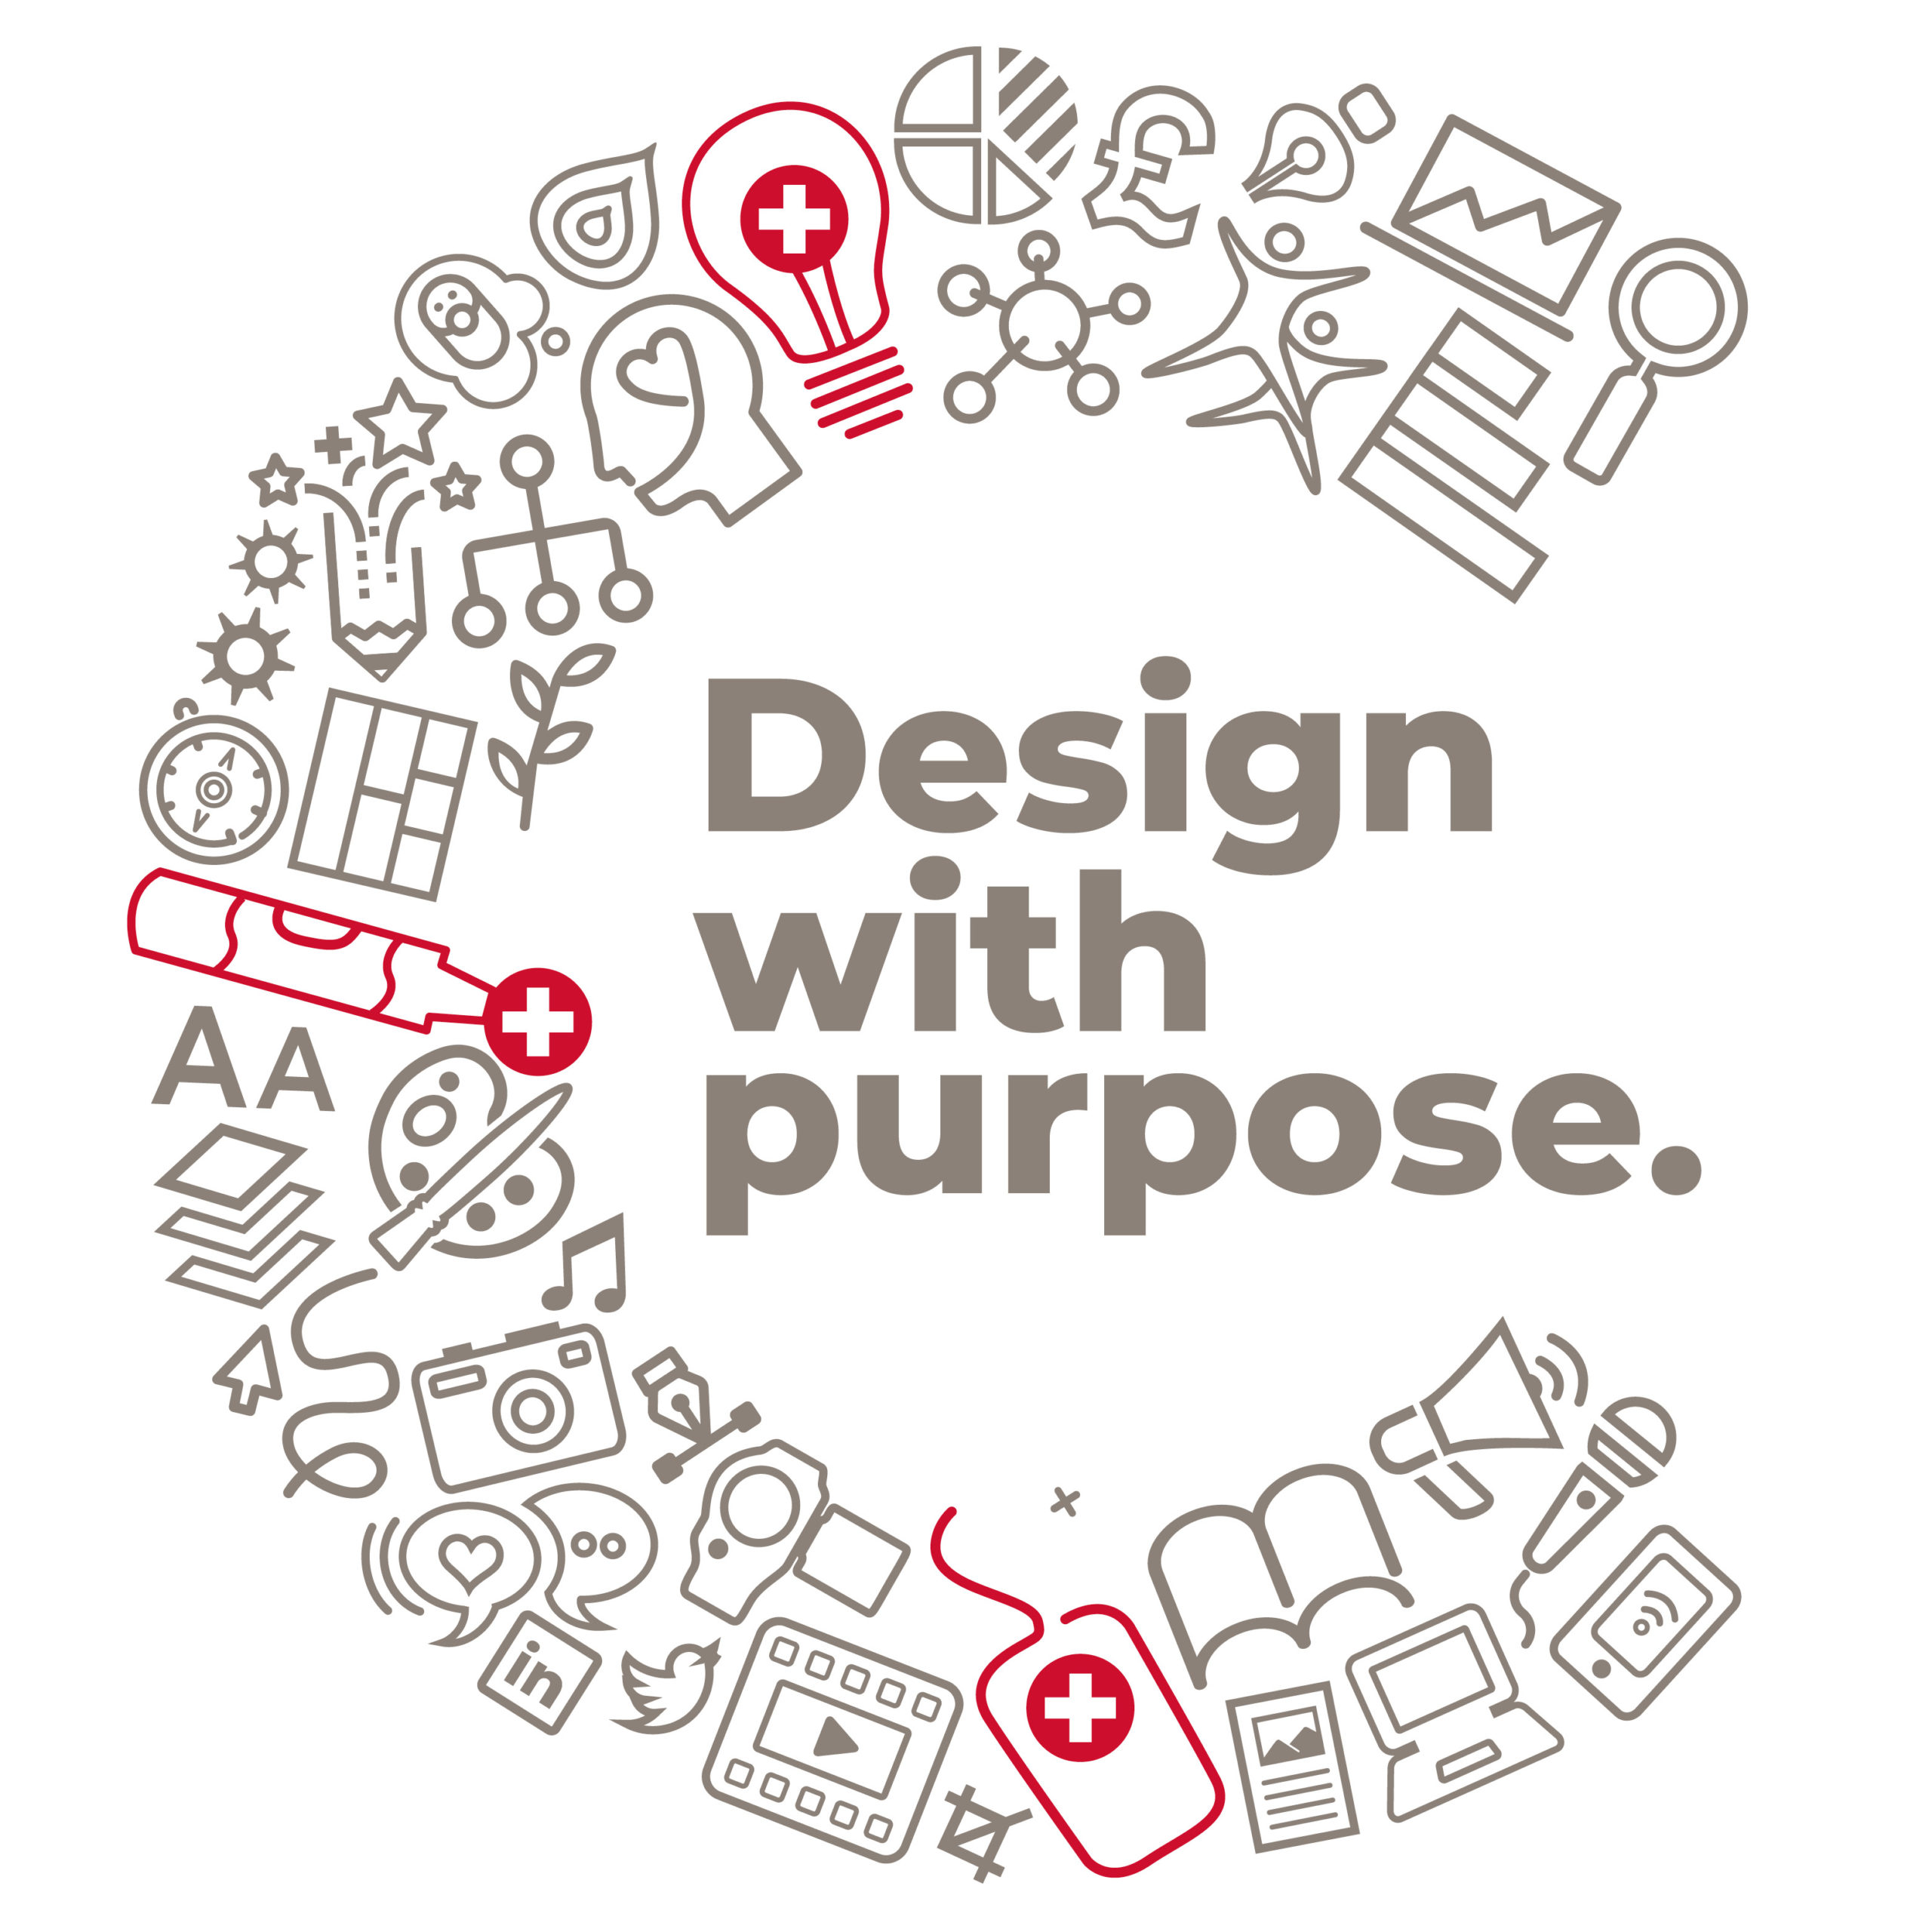 Cohesion Design, design with purpose